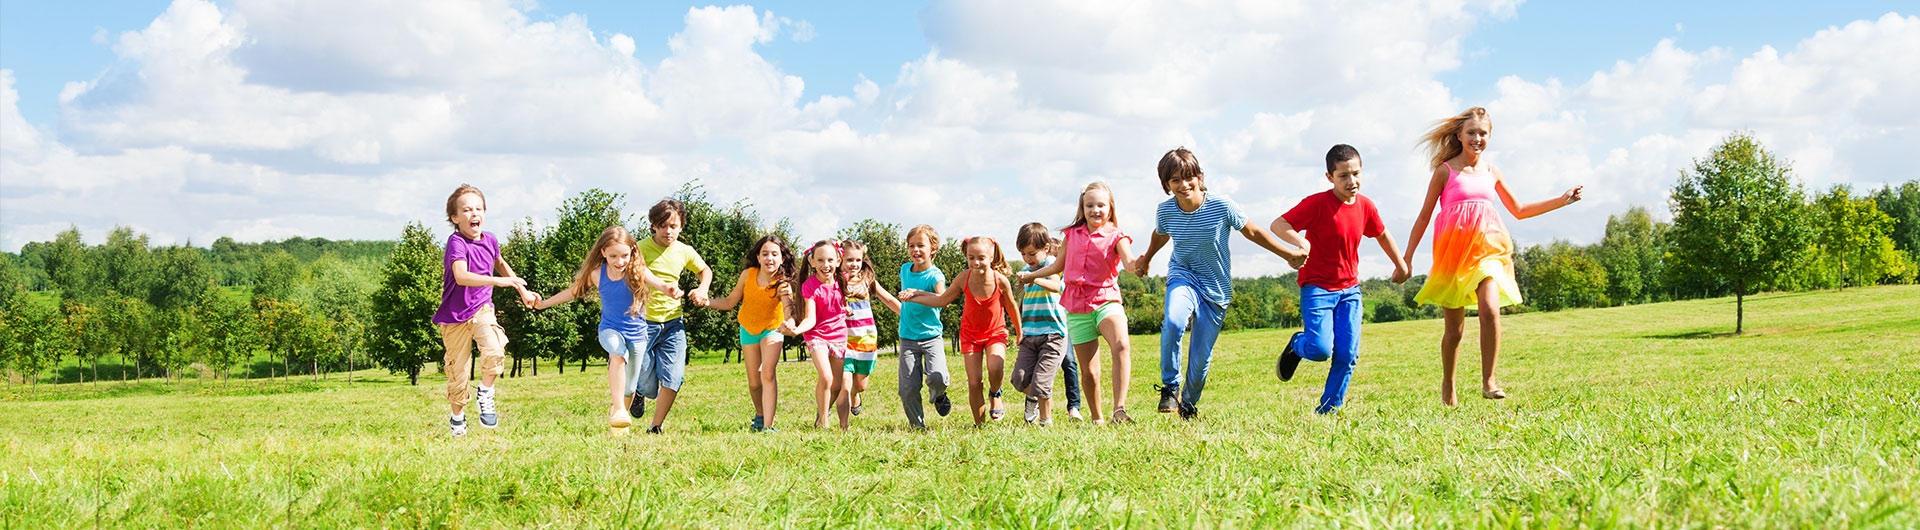 Kids running in field - Pediatric Dentist in Ann Arbor, MI